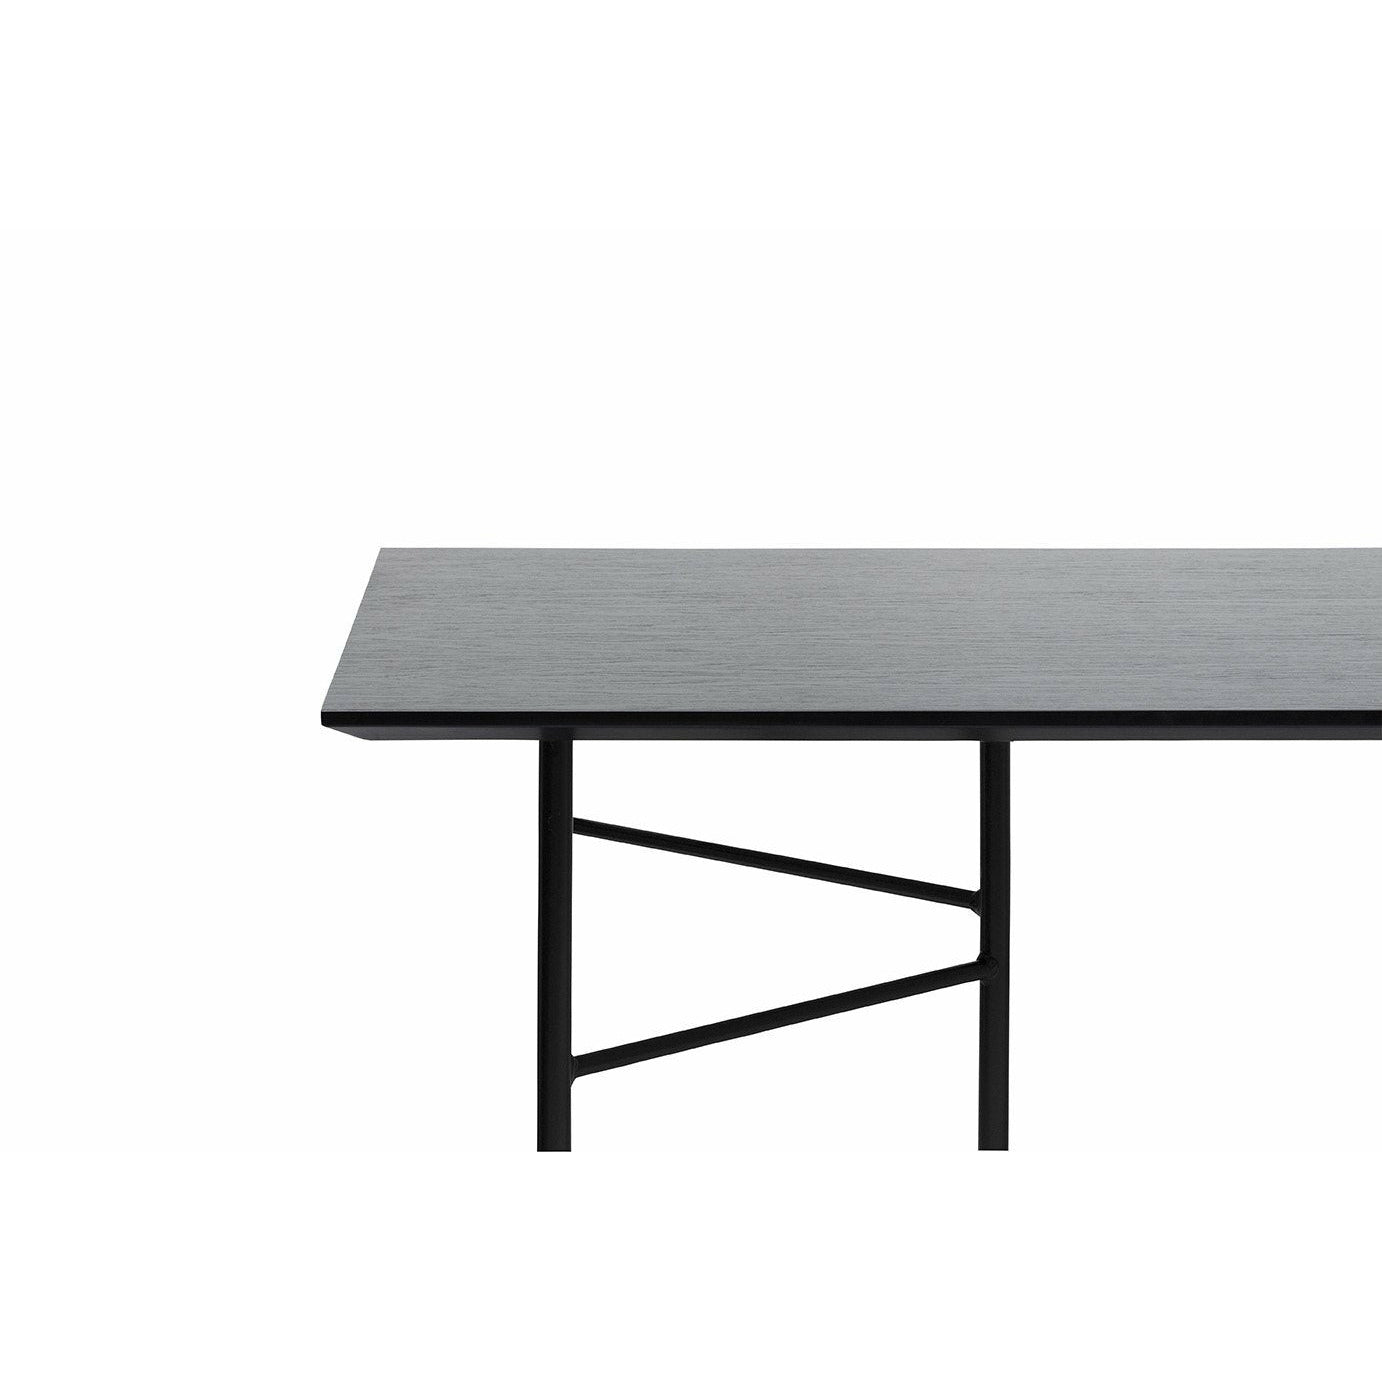 Ferm Living Mingle Table Top 210 cm, fornir czarny dębowy